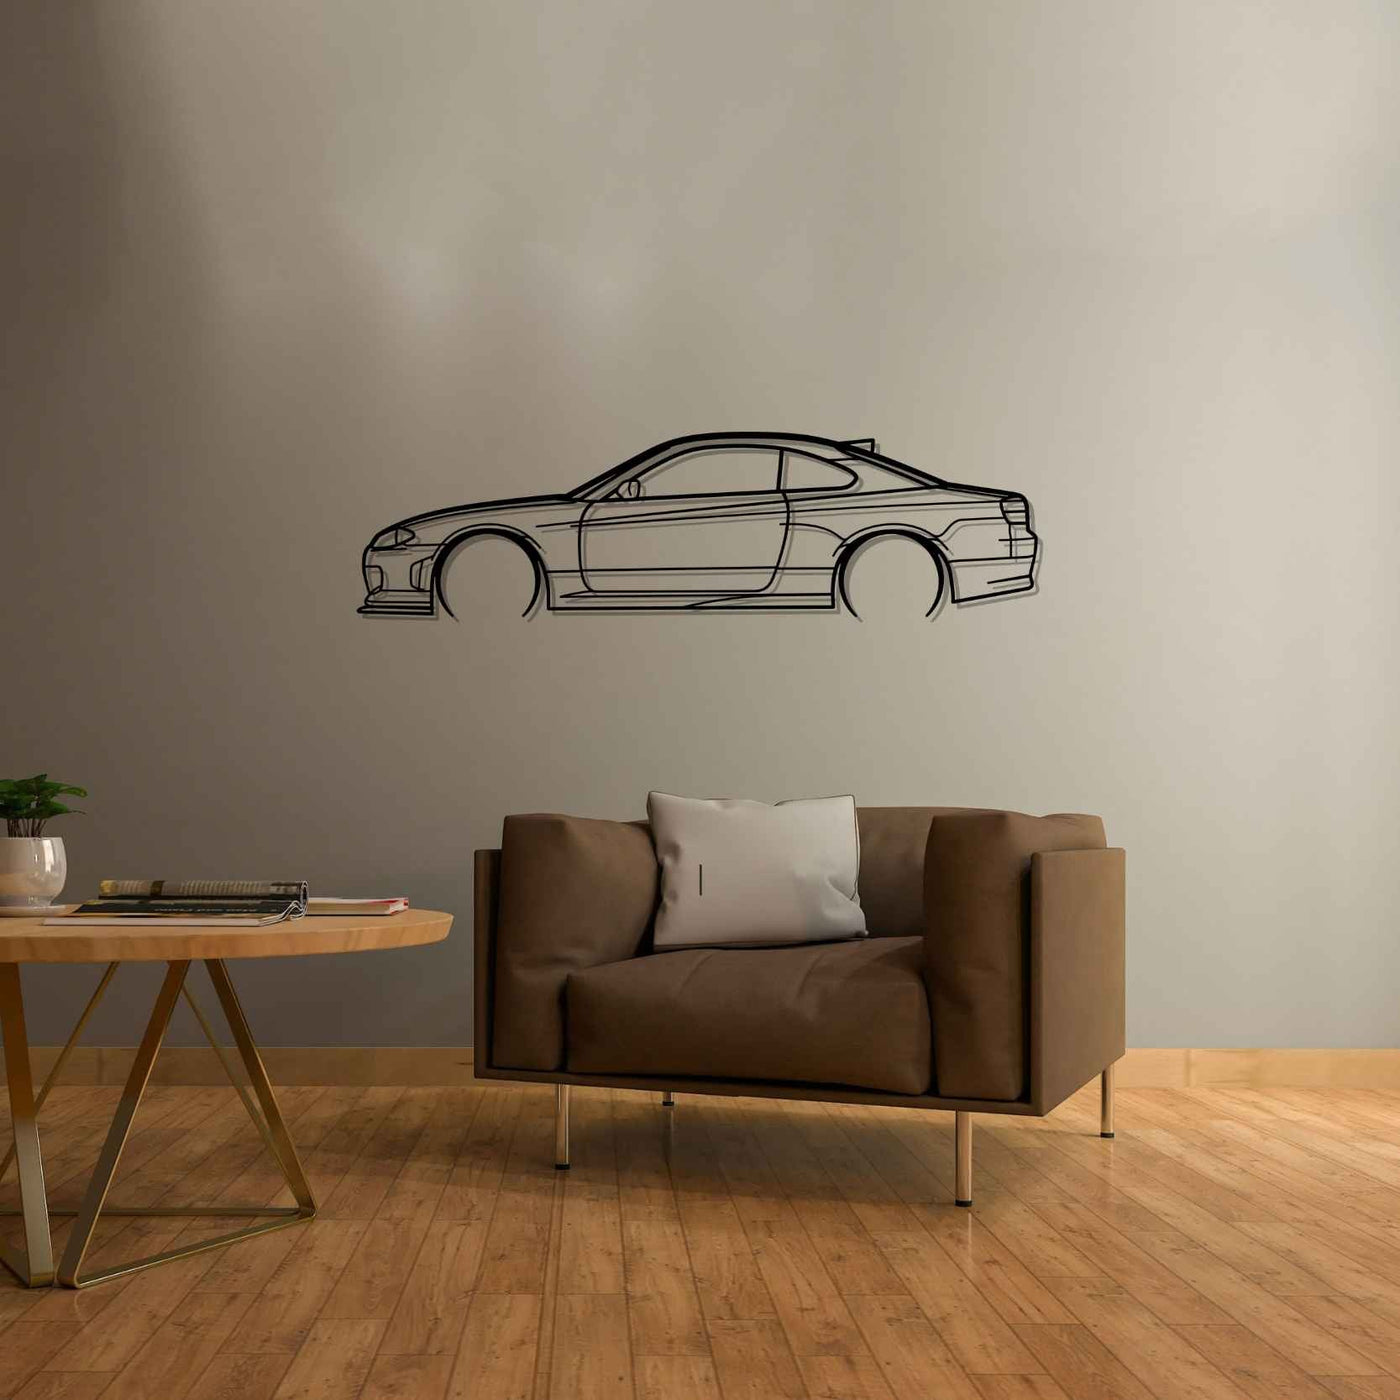 S15 Silvia 2000 Detailed Silhouette Metal Wall Art